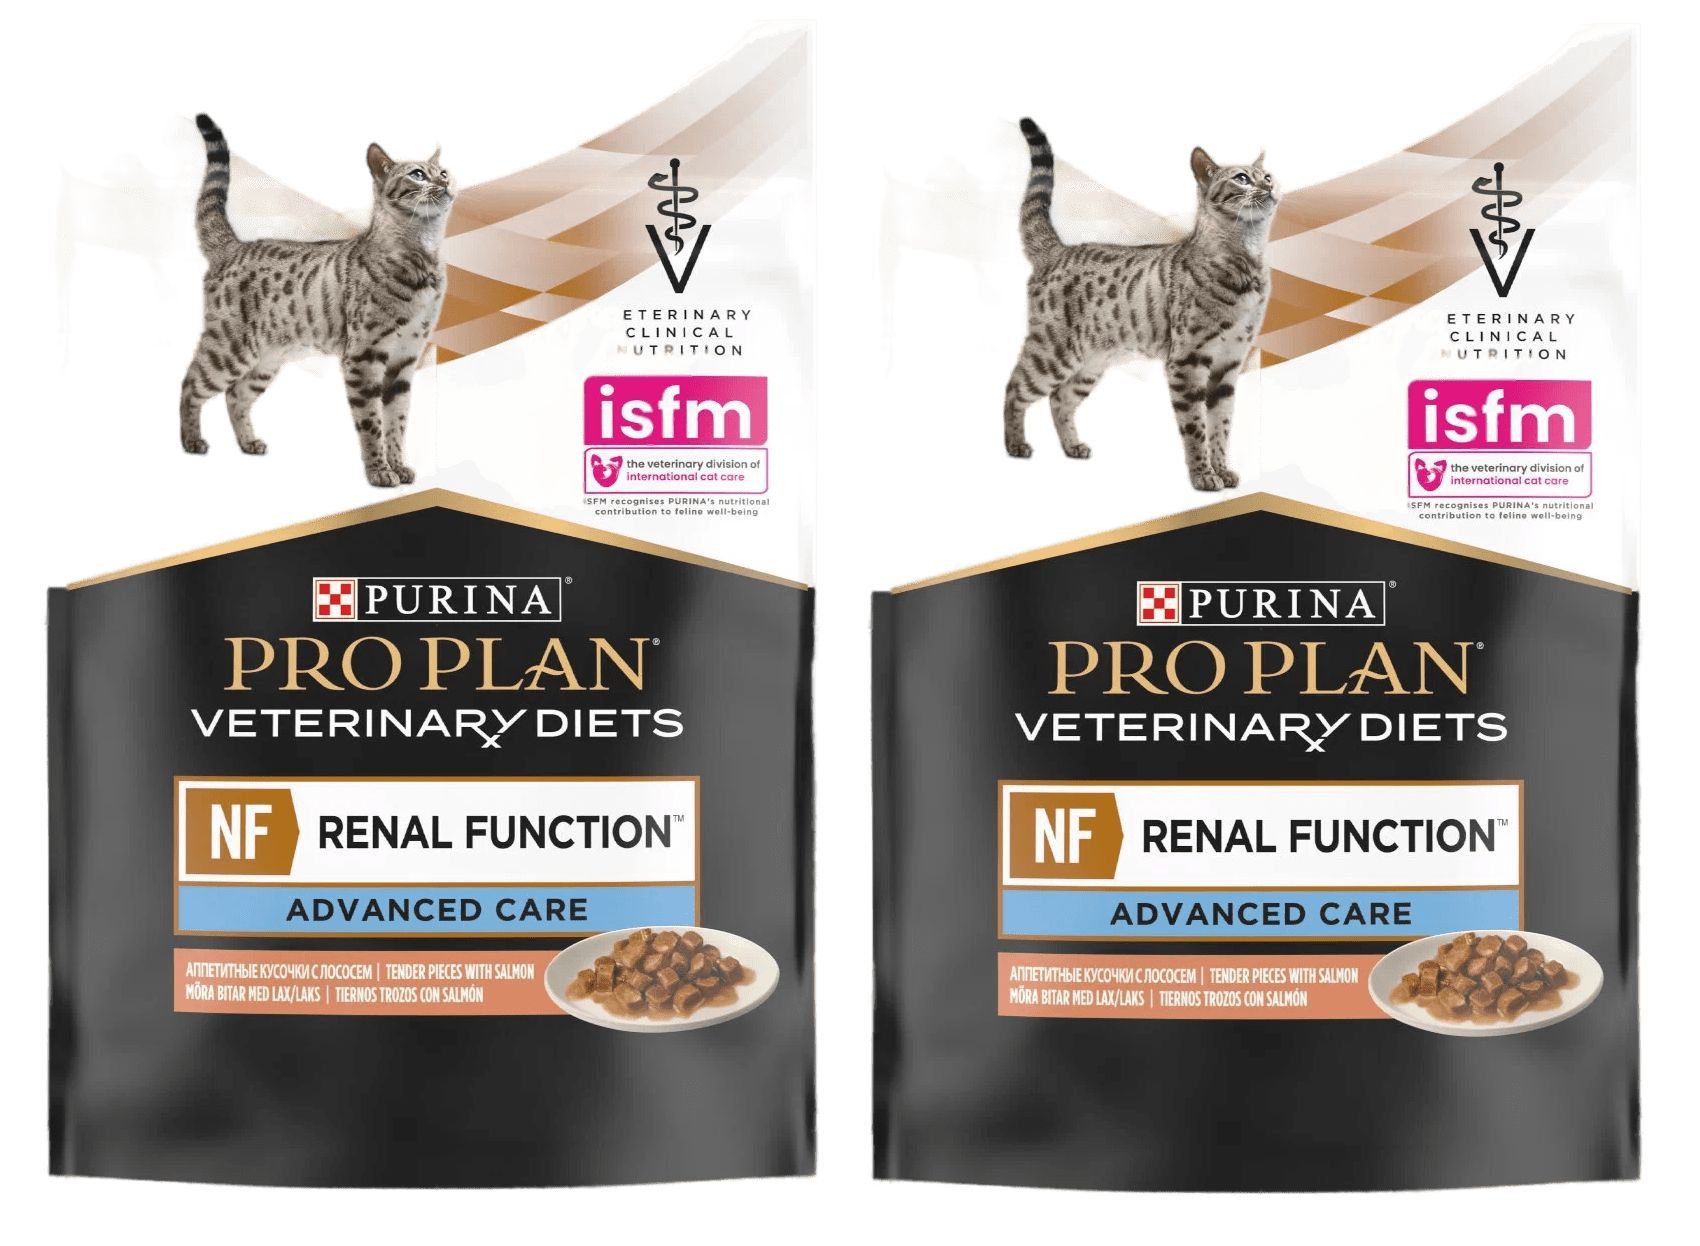 Pro plan nf renal function advanced care. Pro Plan renal function для кошек. Renal Advanced Care для кошек. 2 Сухой корм для кошек Pro Plan (NF) renal function. Пропран NF для кошек.